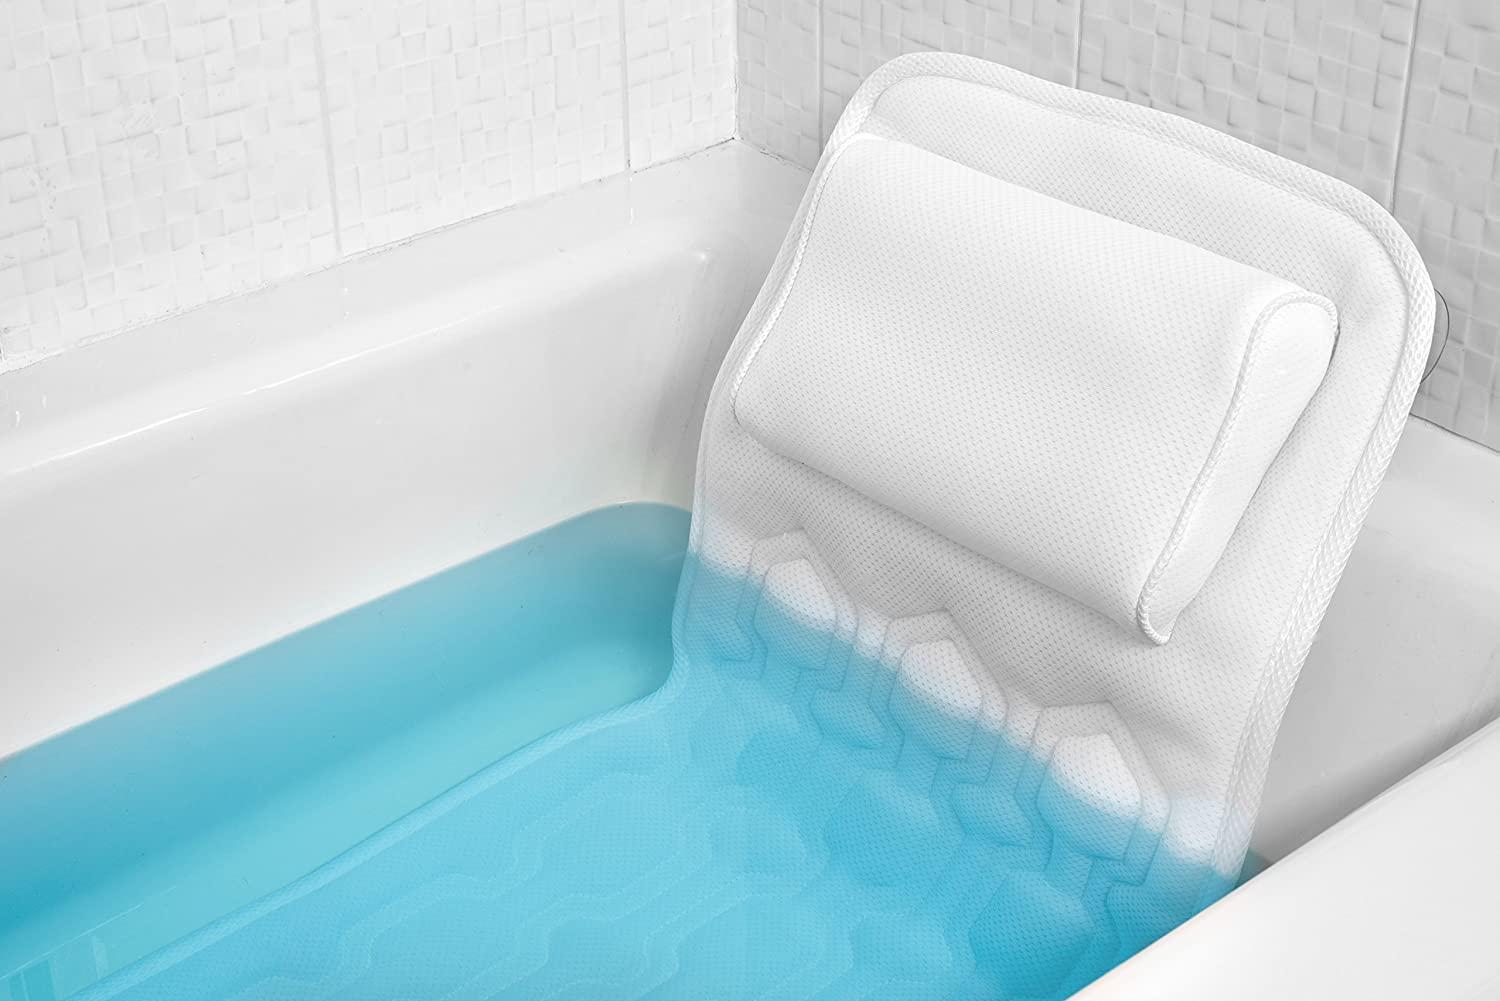 Best Deal for Adults Bath Cushion for Tub - Full Body Bath Pillow